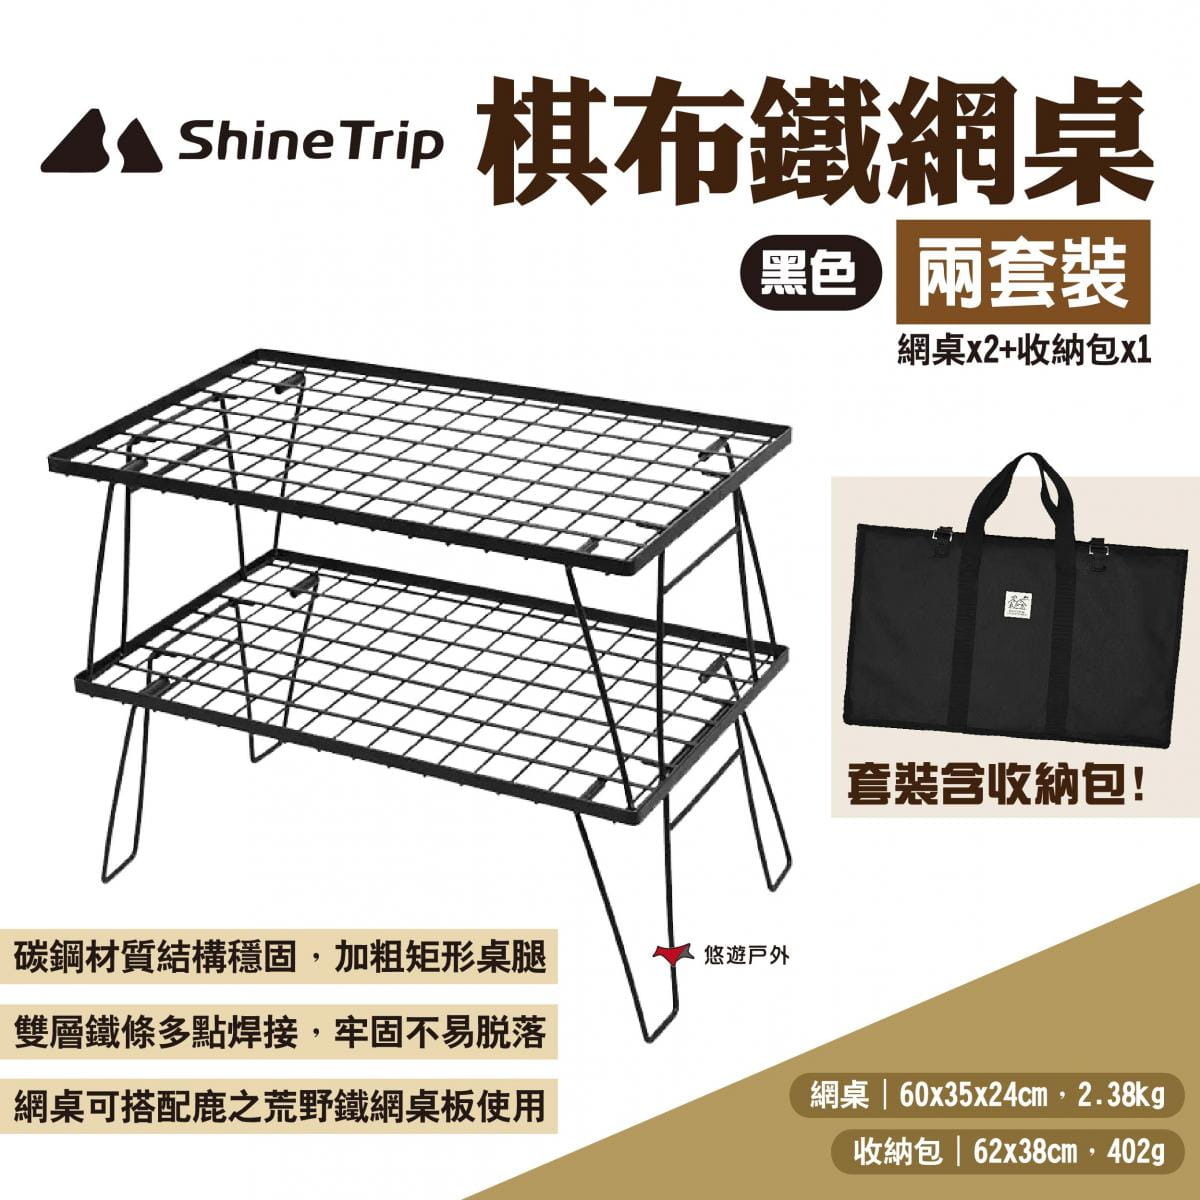 【ShineTrip山趣】棋布鐵網桌兩套裝 黑色 悠遊戶外 1